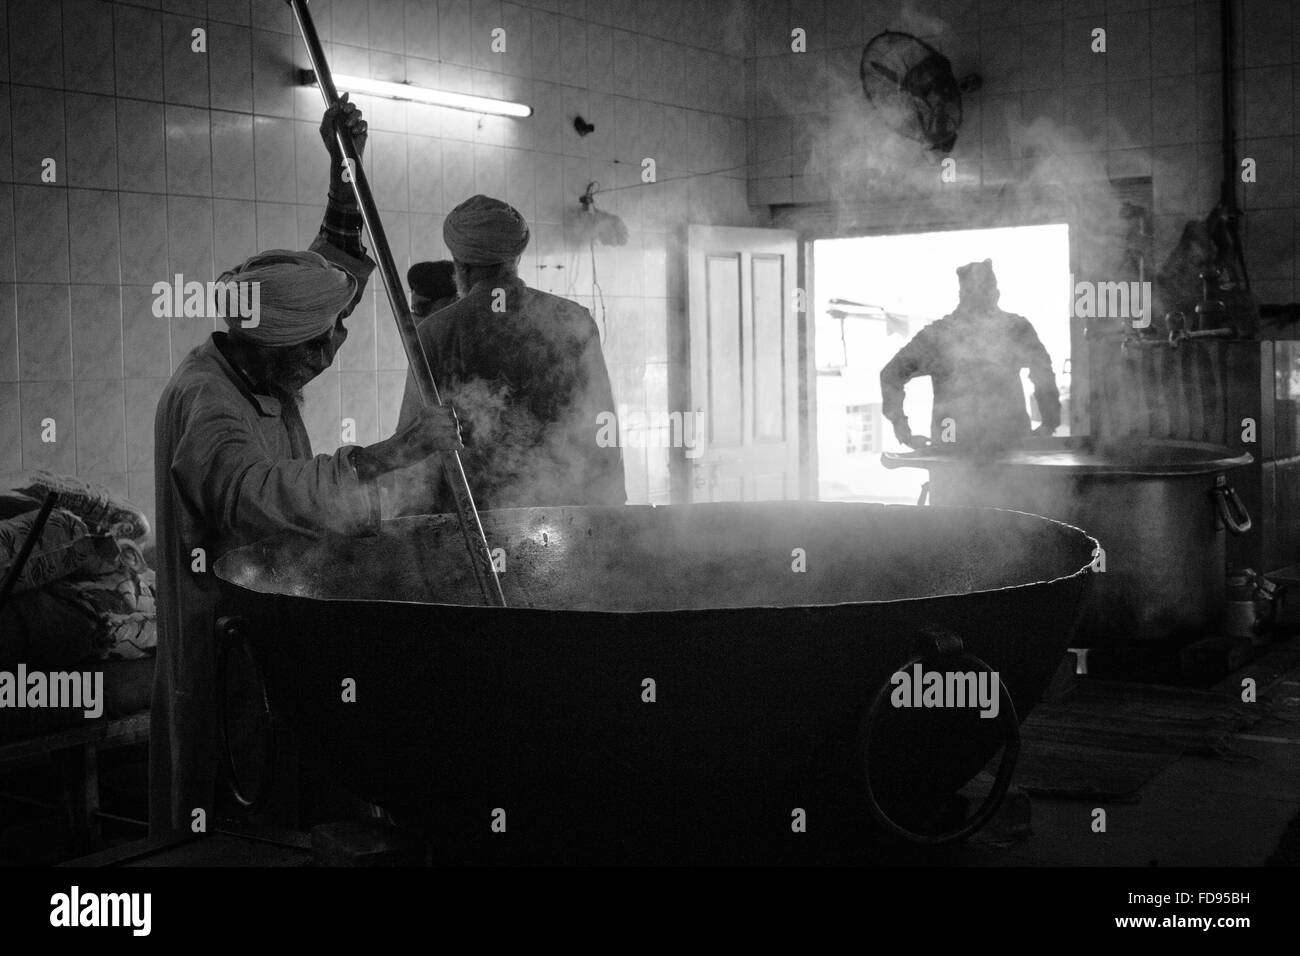 Sikh man stirs large pot of food at volunteer community kitchen, Delhi India Stock Photo